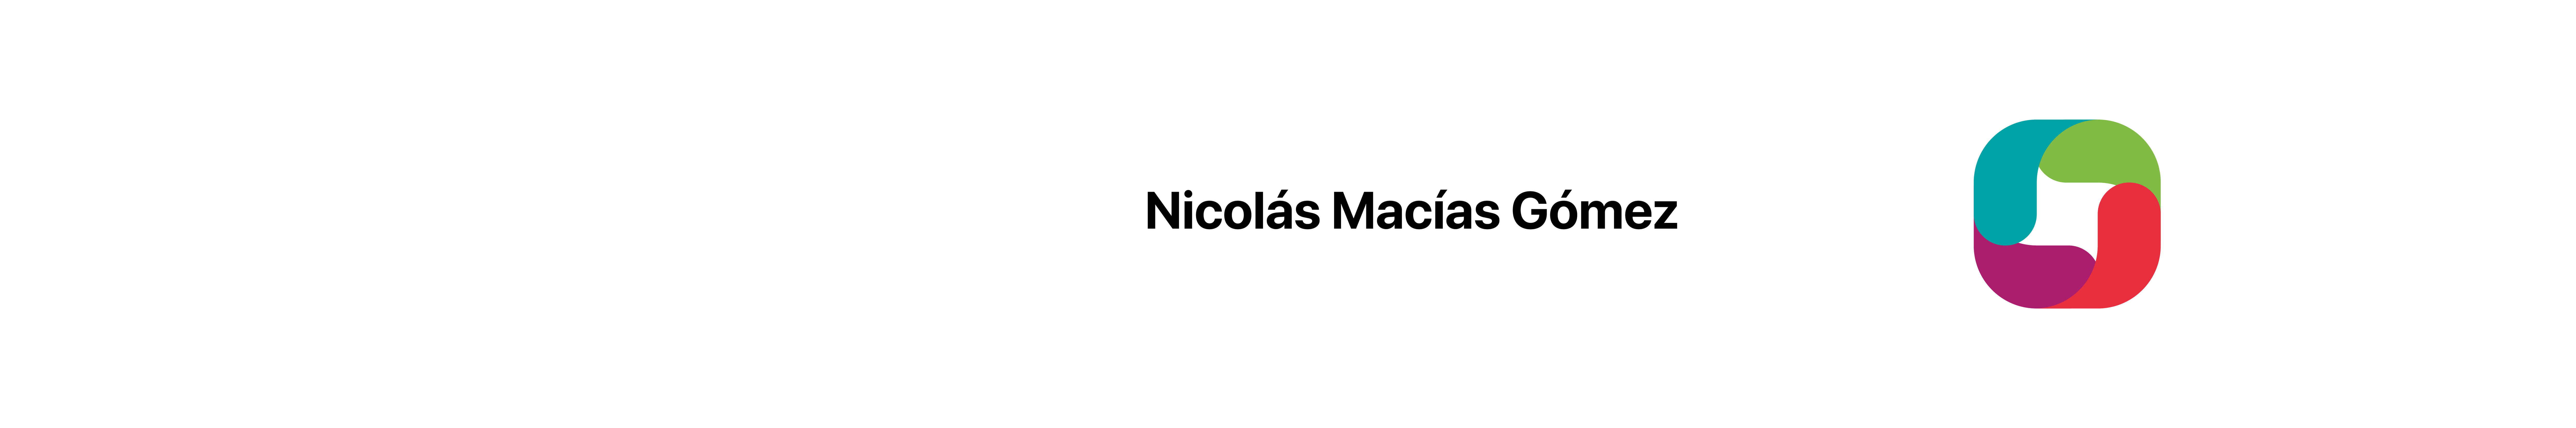 Nicolás Macías Gómez のプロファイルバナー